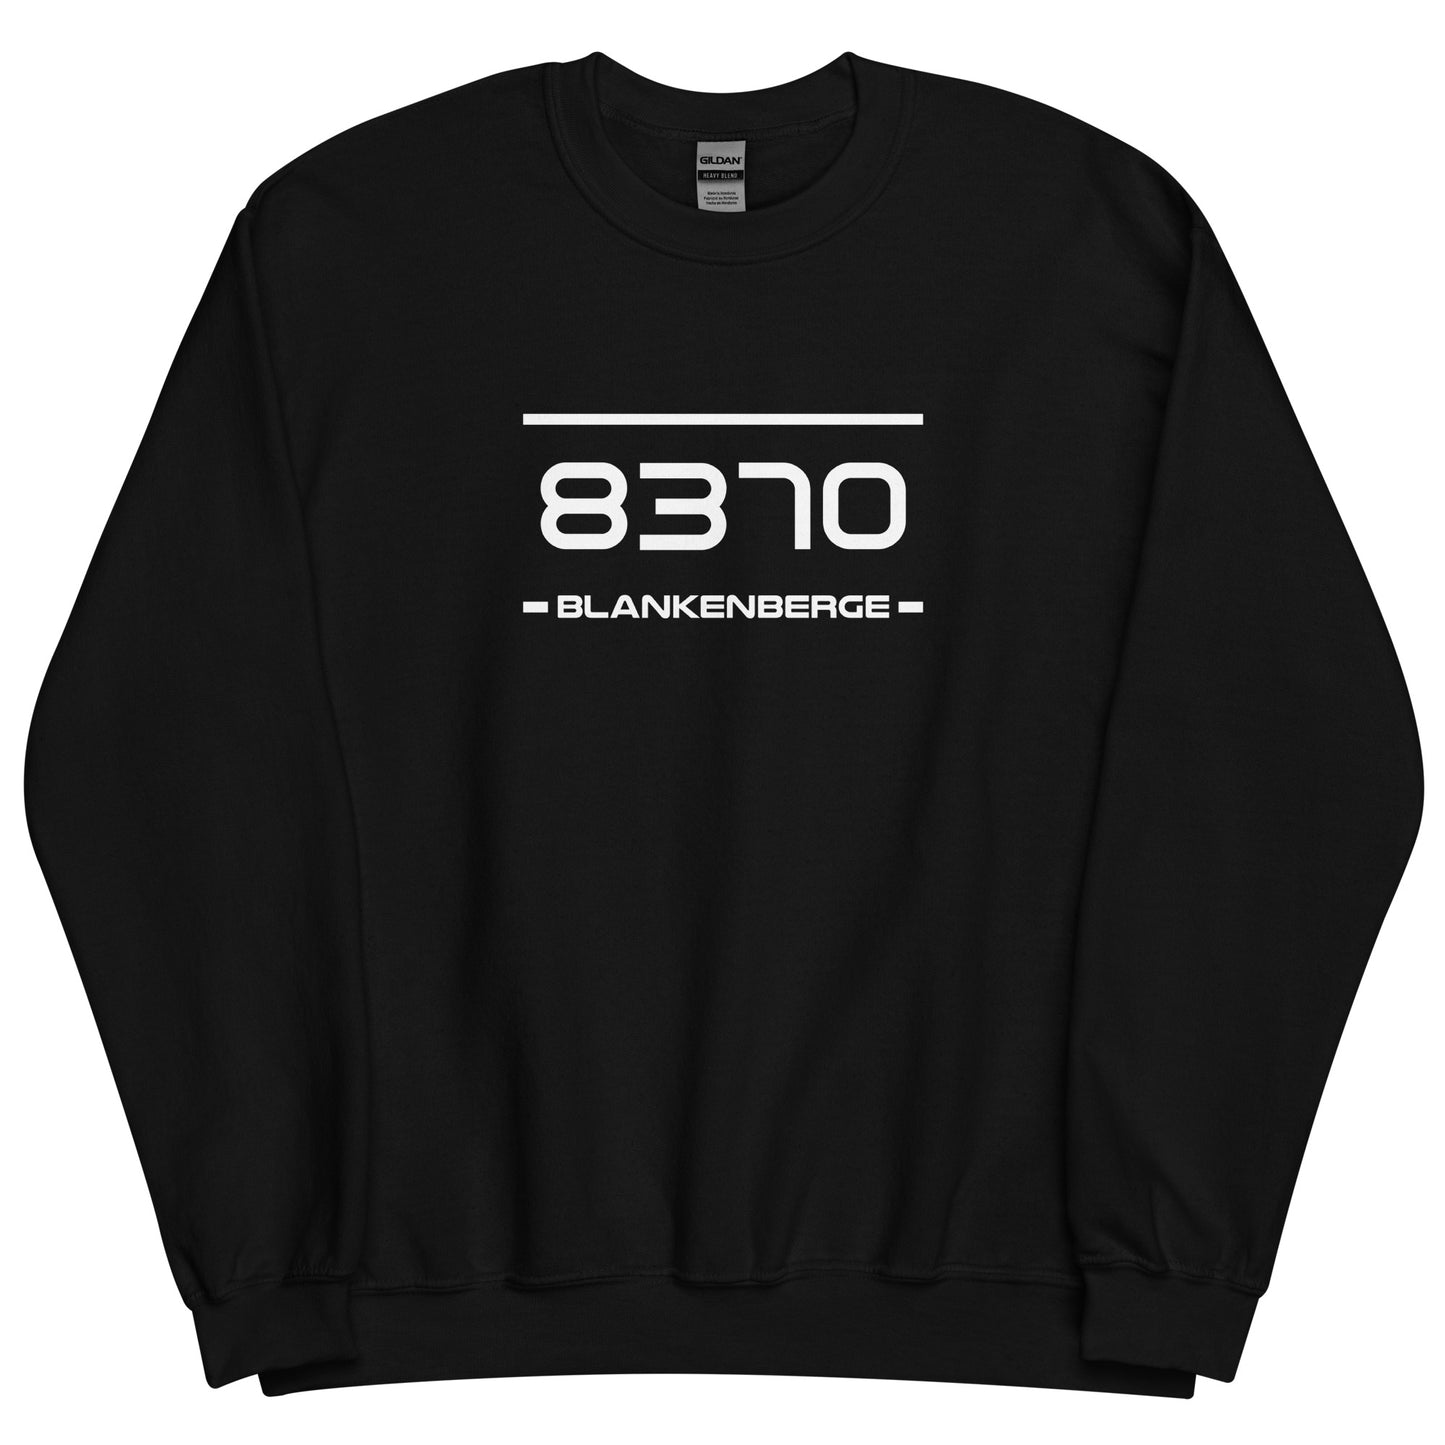 Sweater - 8370 - Blankenberge (M/V)